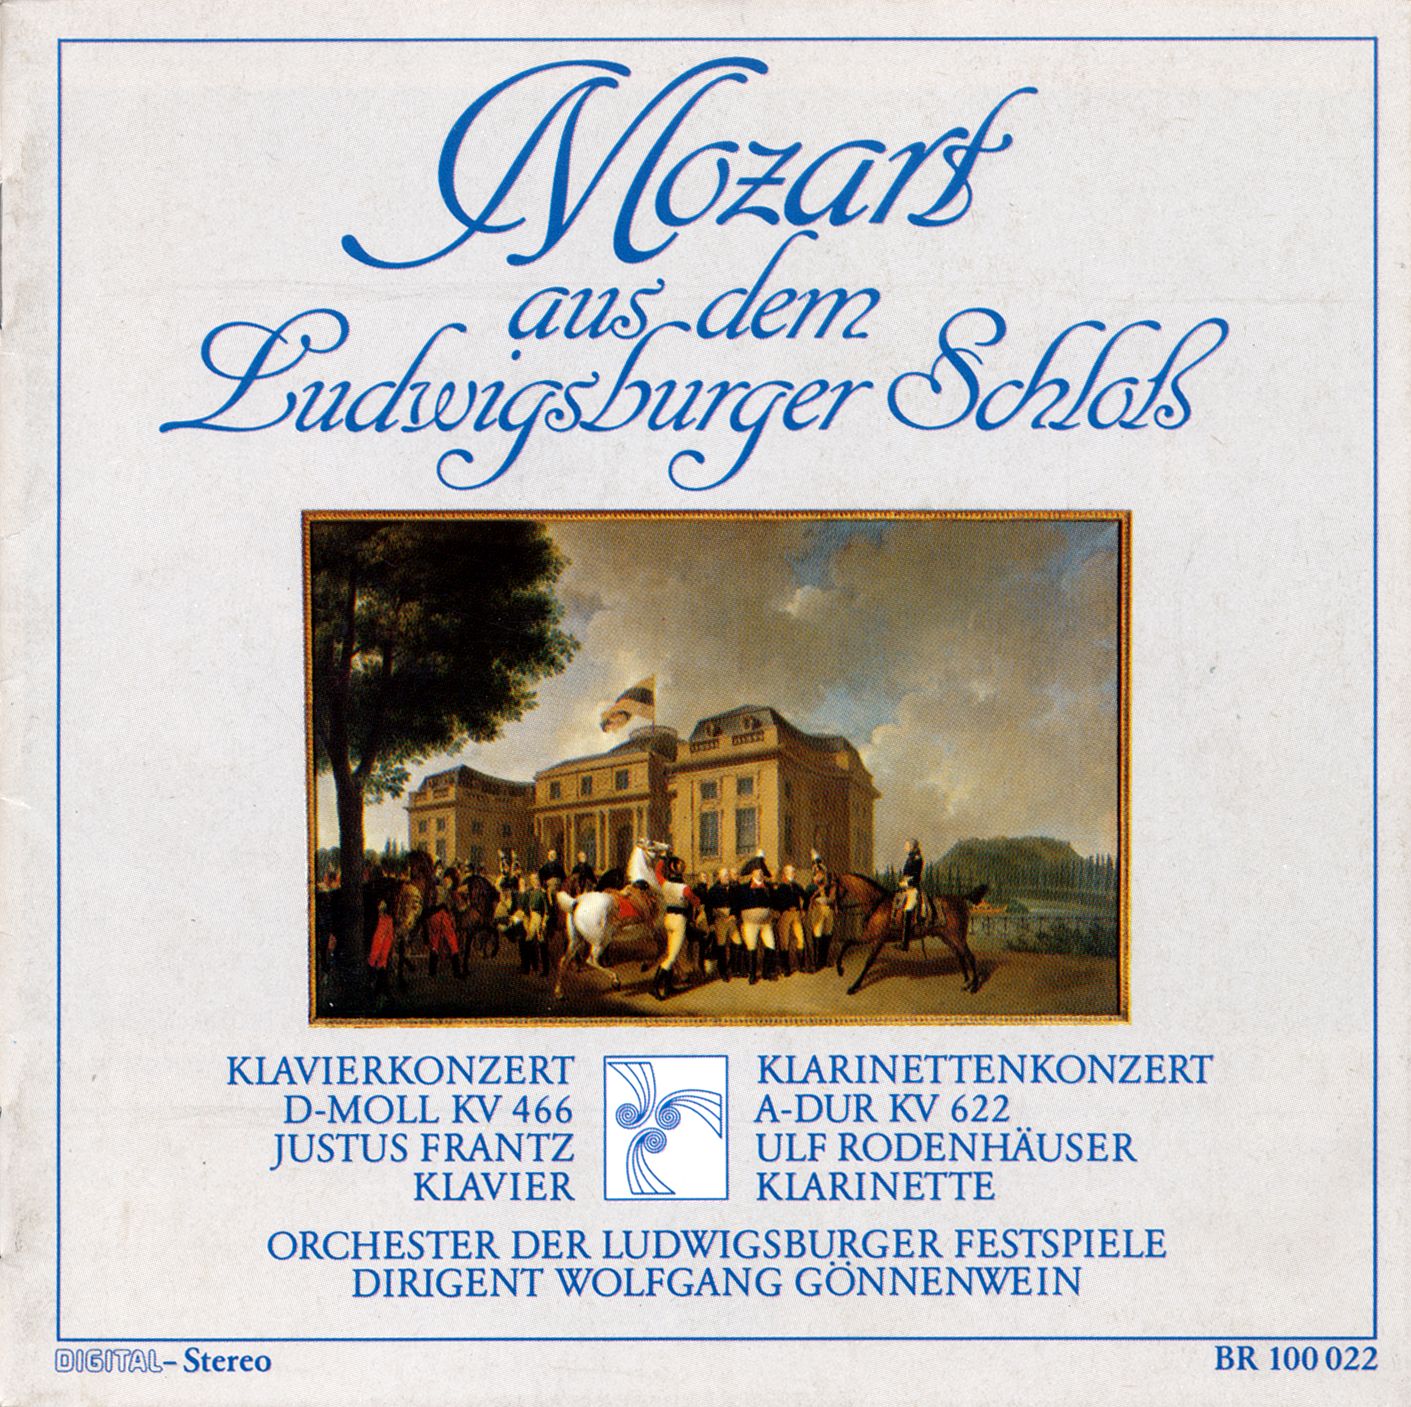 Mozart aus dem Ludwigsburger Schloß I